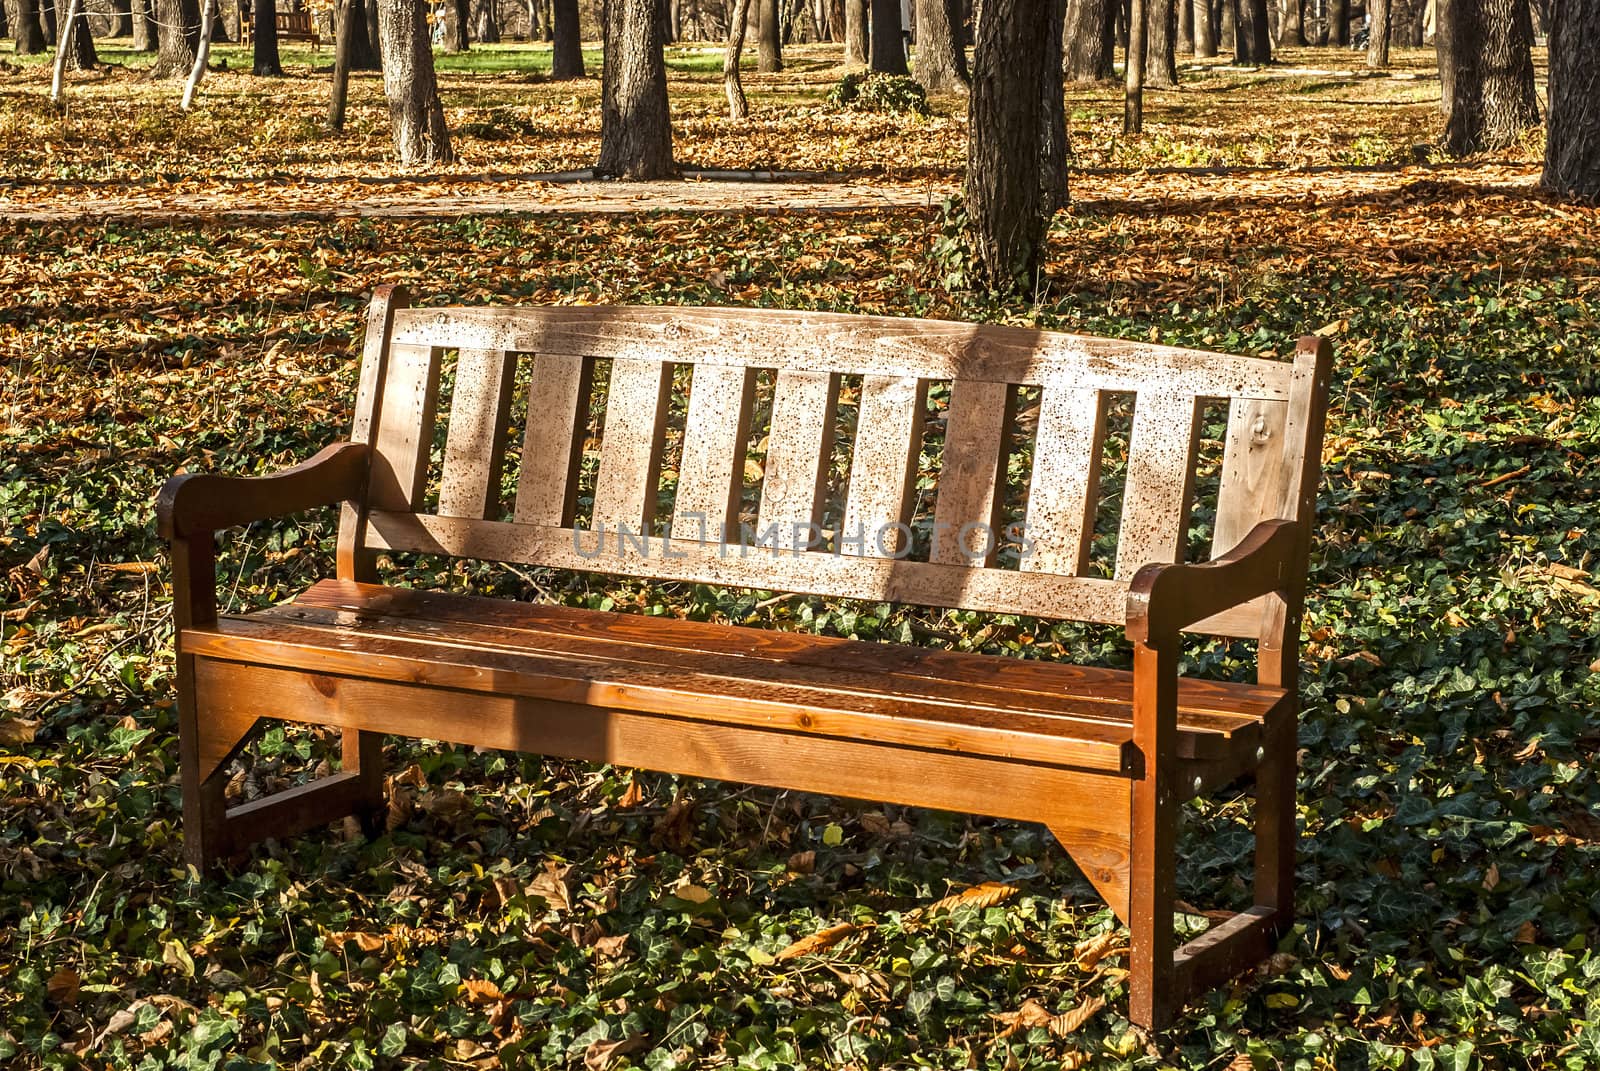 Wooden varnished brown bench in autumn park ground